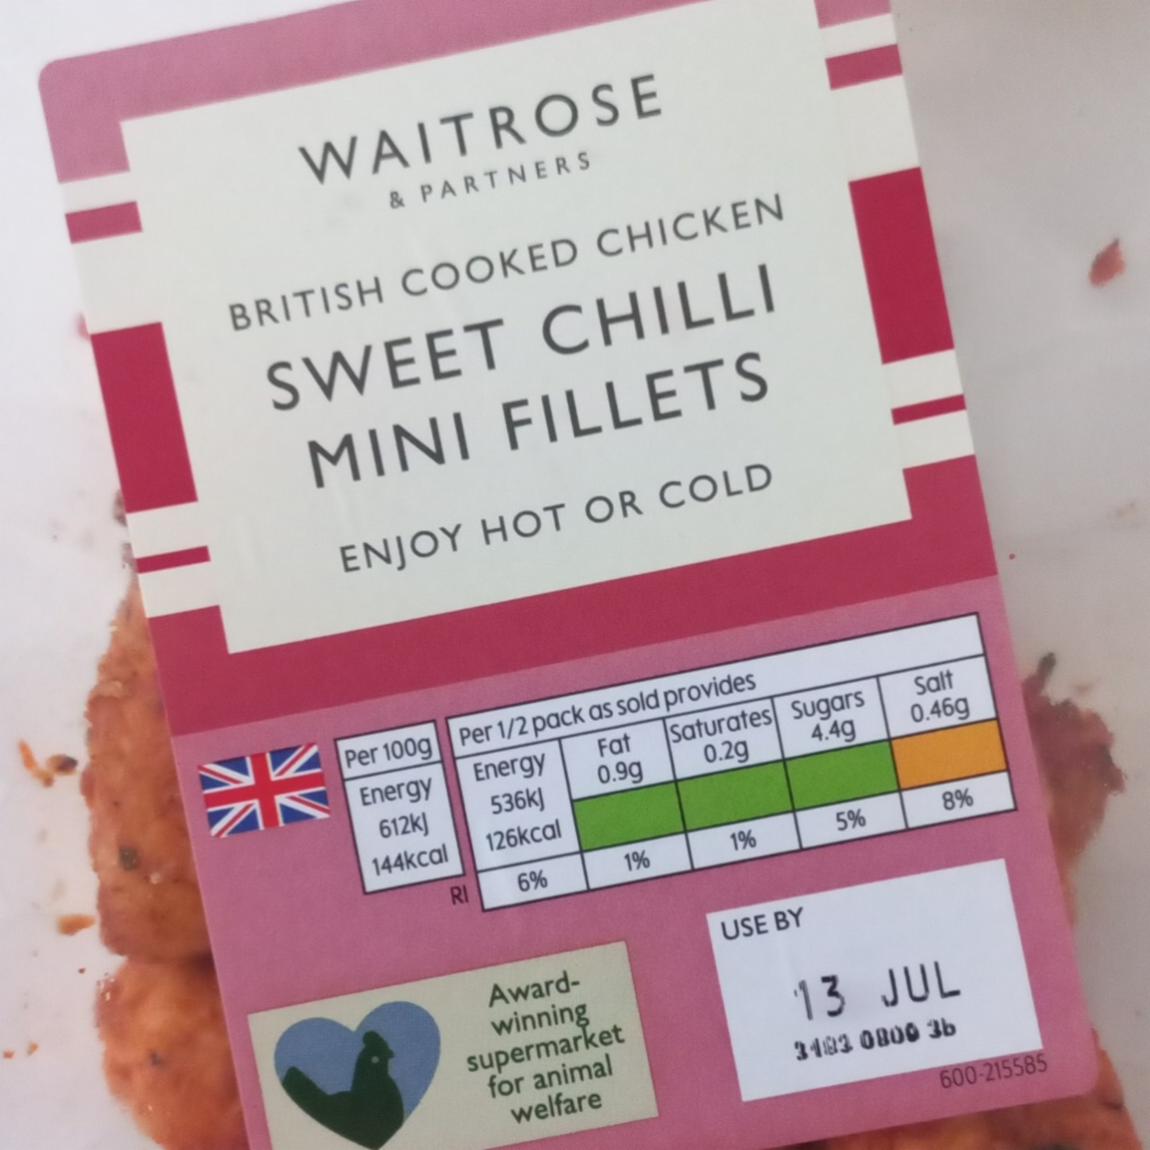 Fotografie - British Cooked Chicken Sweet Chilli Mini Fillets Waitrose & Partners